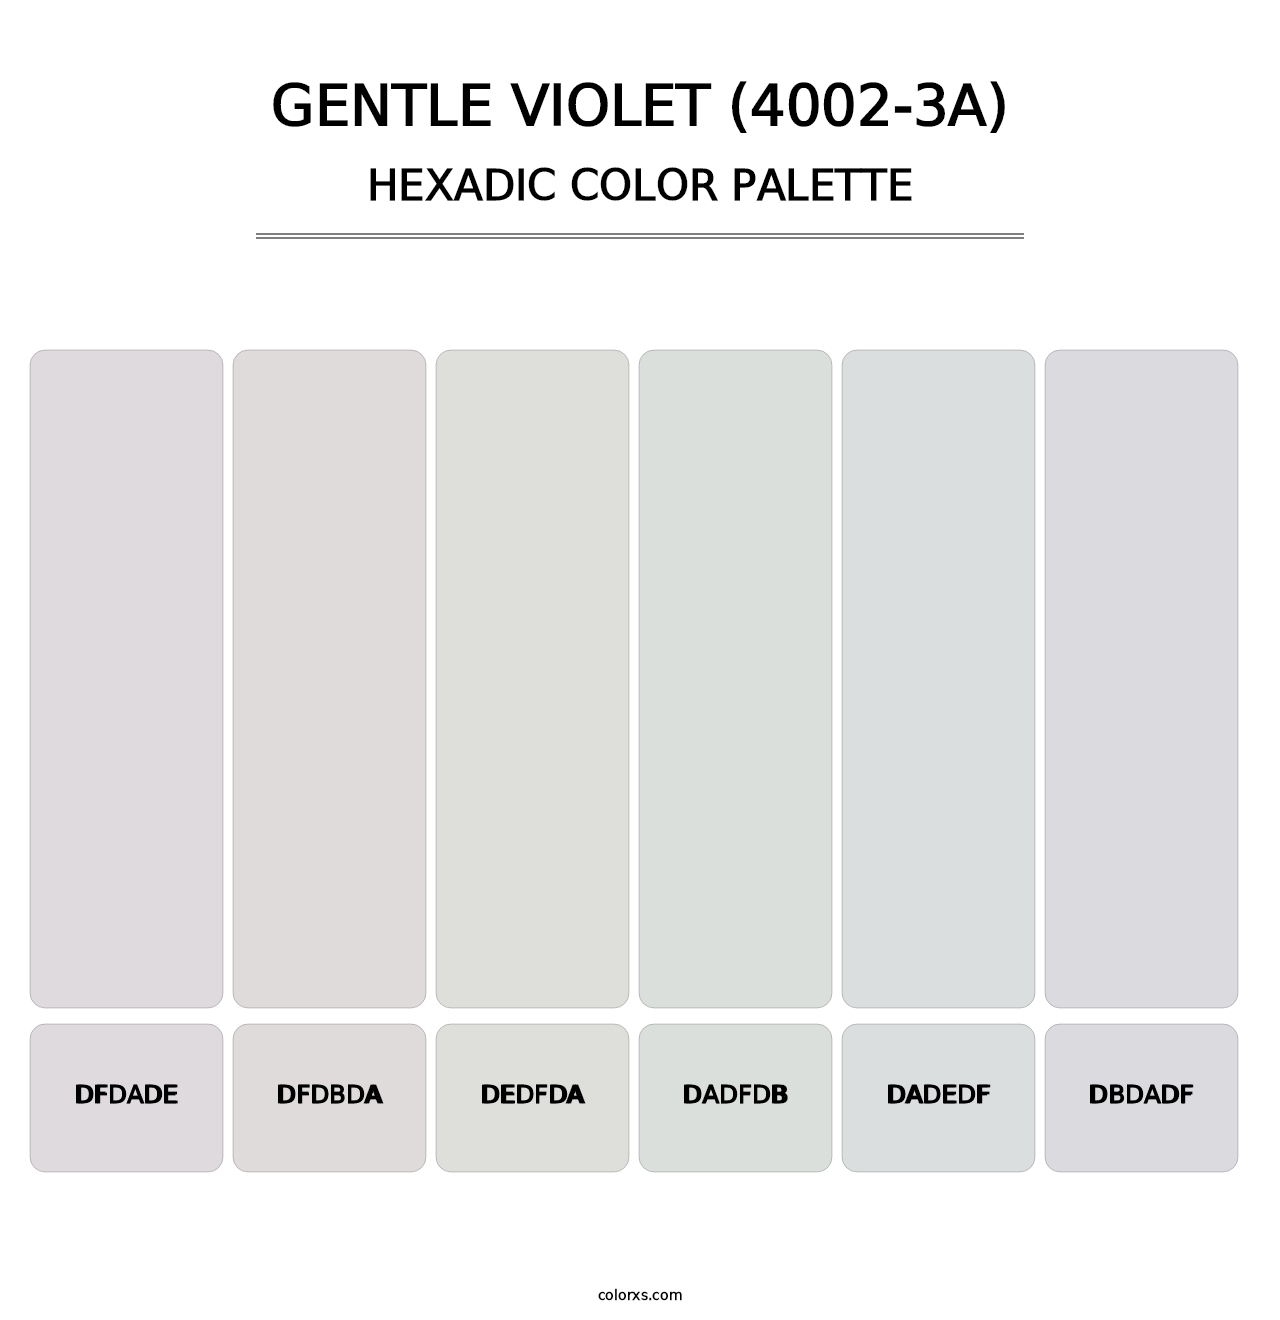 Gentle Violet (4002-3A) - Hexadic Color Palette